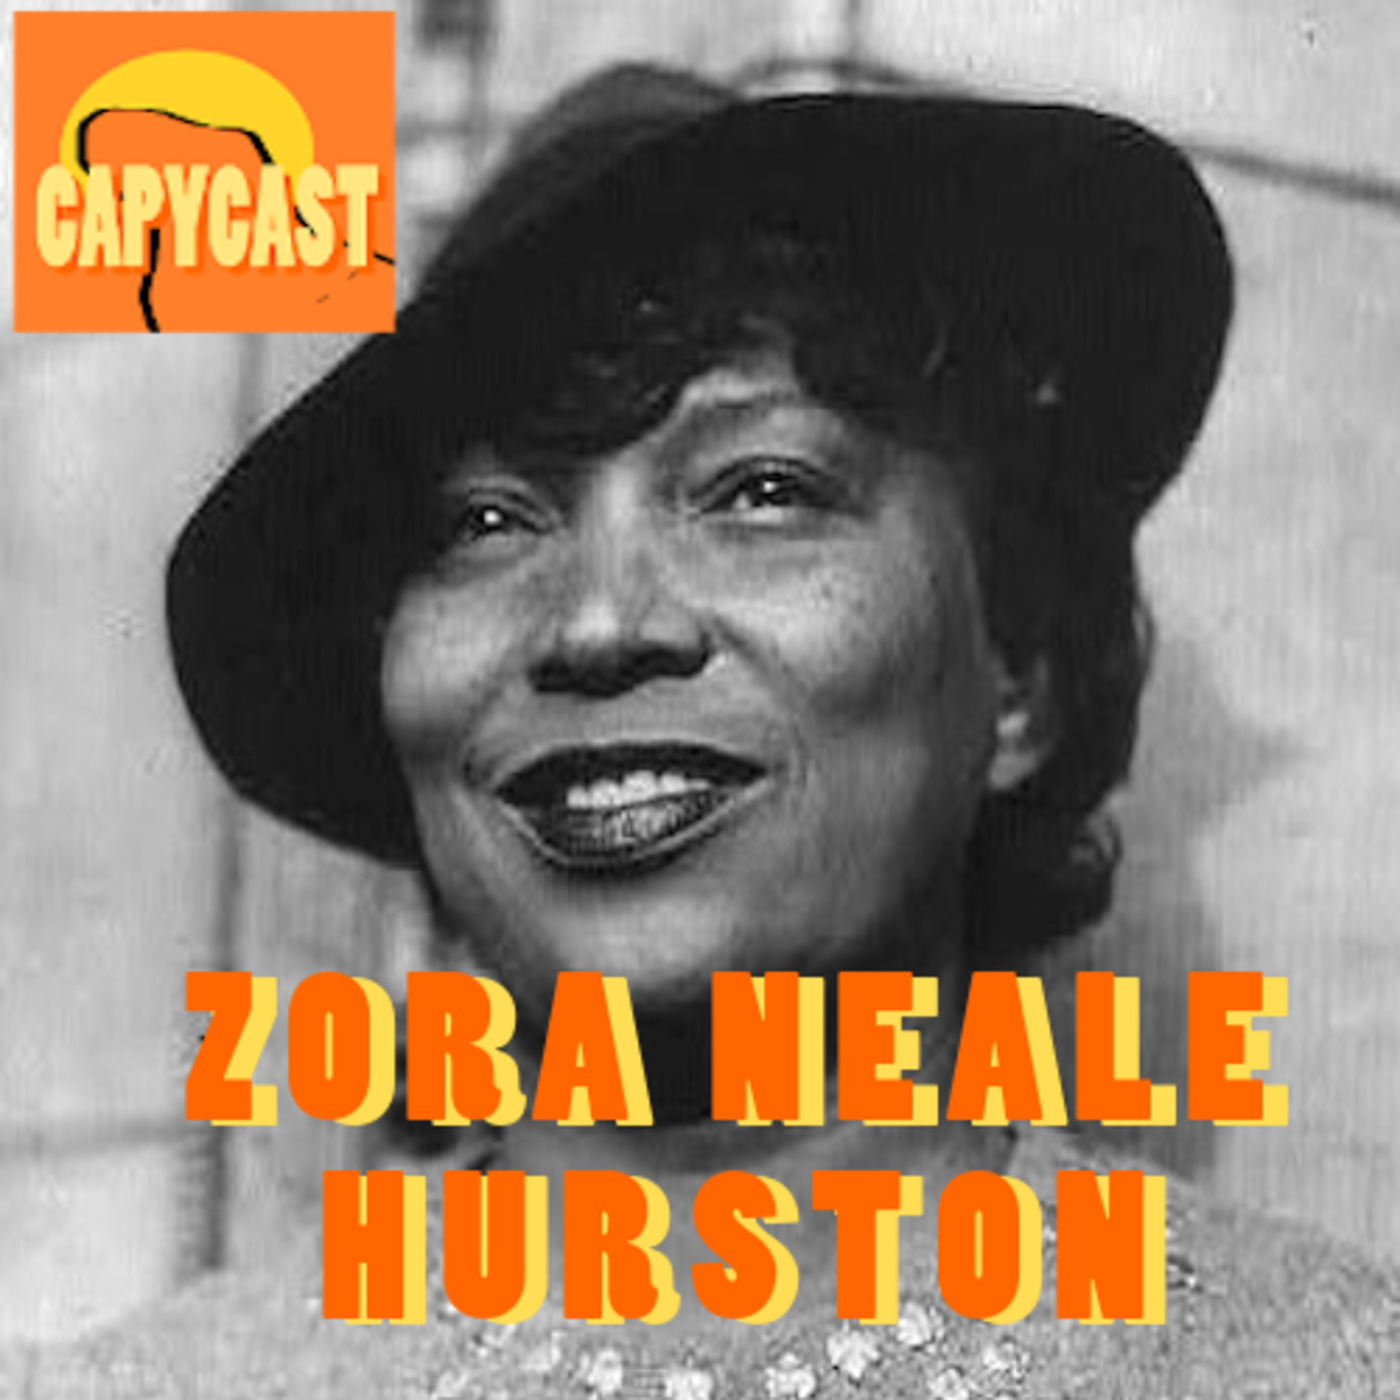 Capycast 7 - Zora Neale Hurston